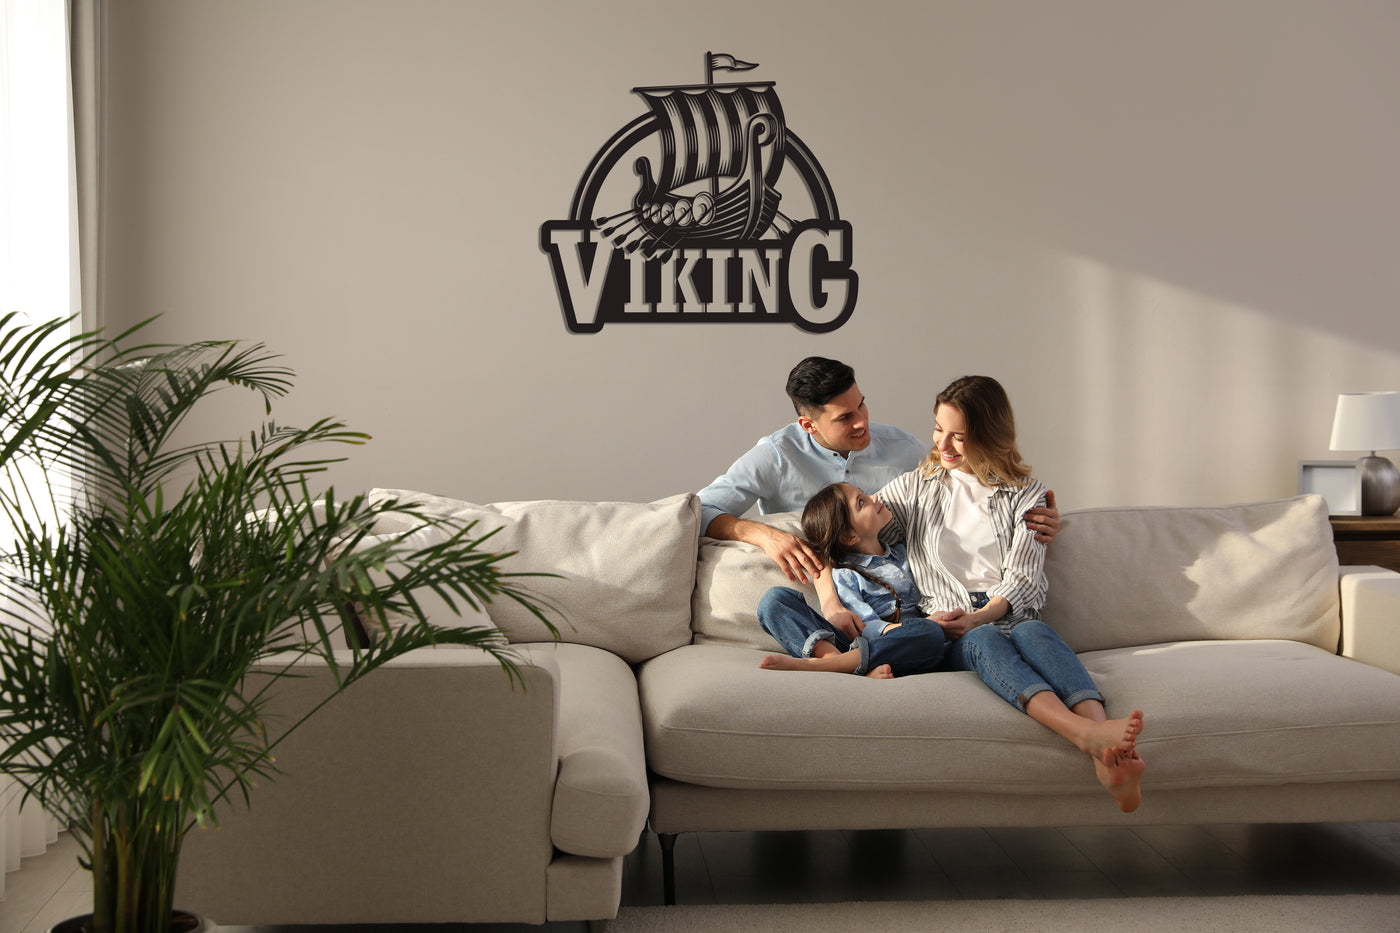 Viking Ship Metal Wall Art